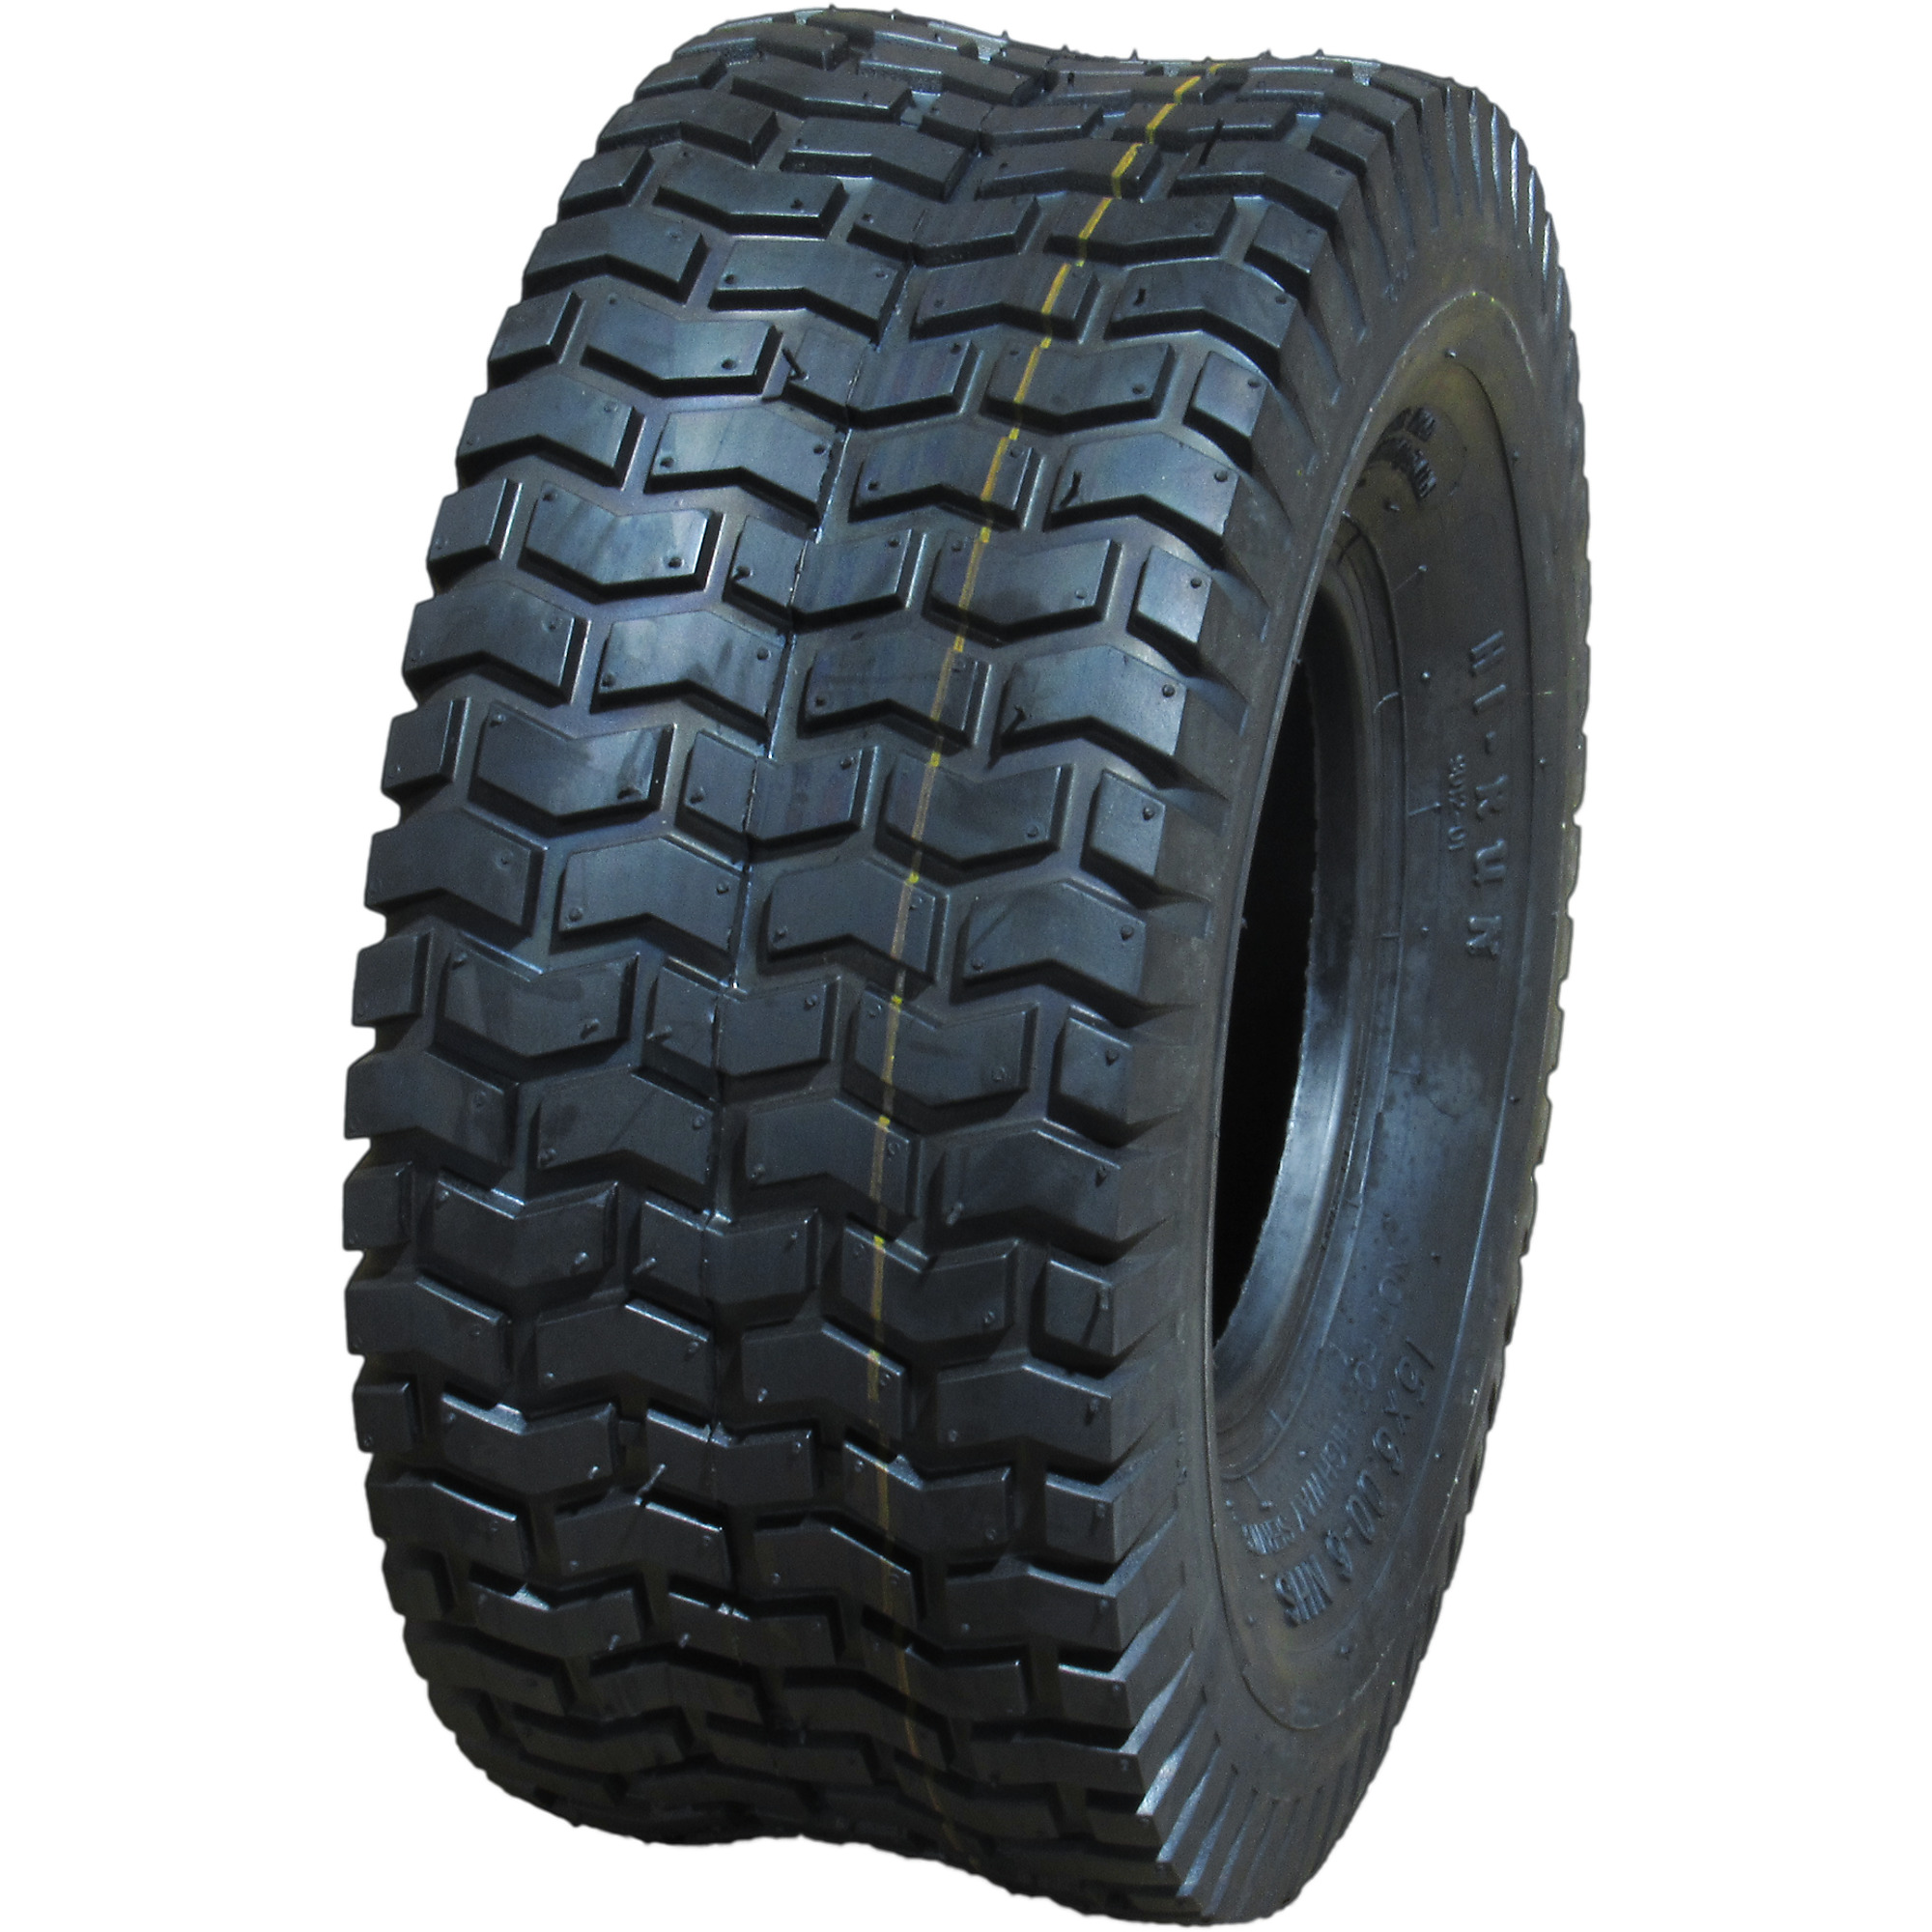 HI-RUN, Lawn Garden Tire, SU12 Turf II, Tire Size 11X4.00-4 Load Range Rating A, Model WD1096